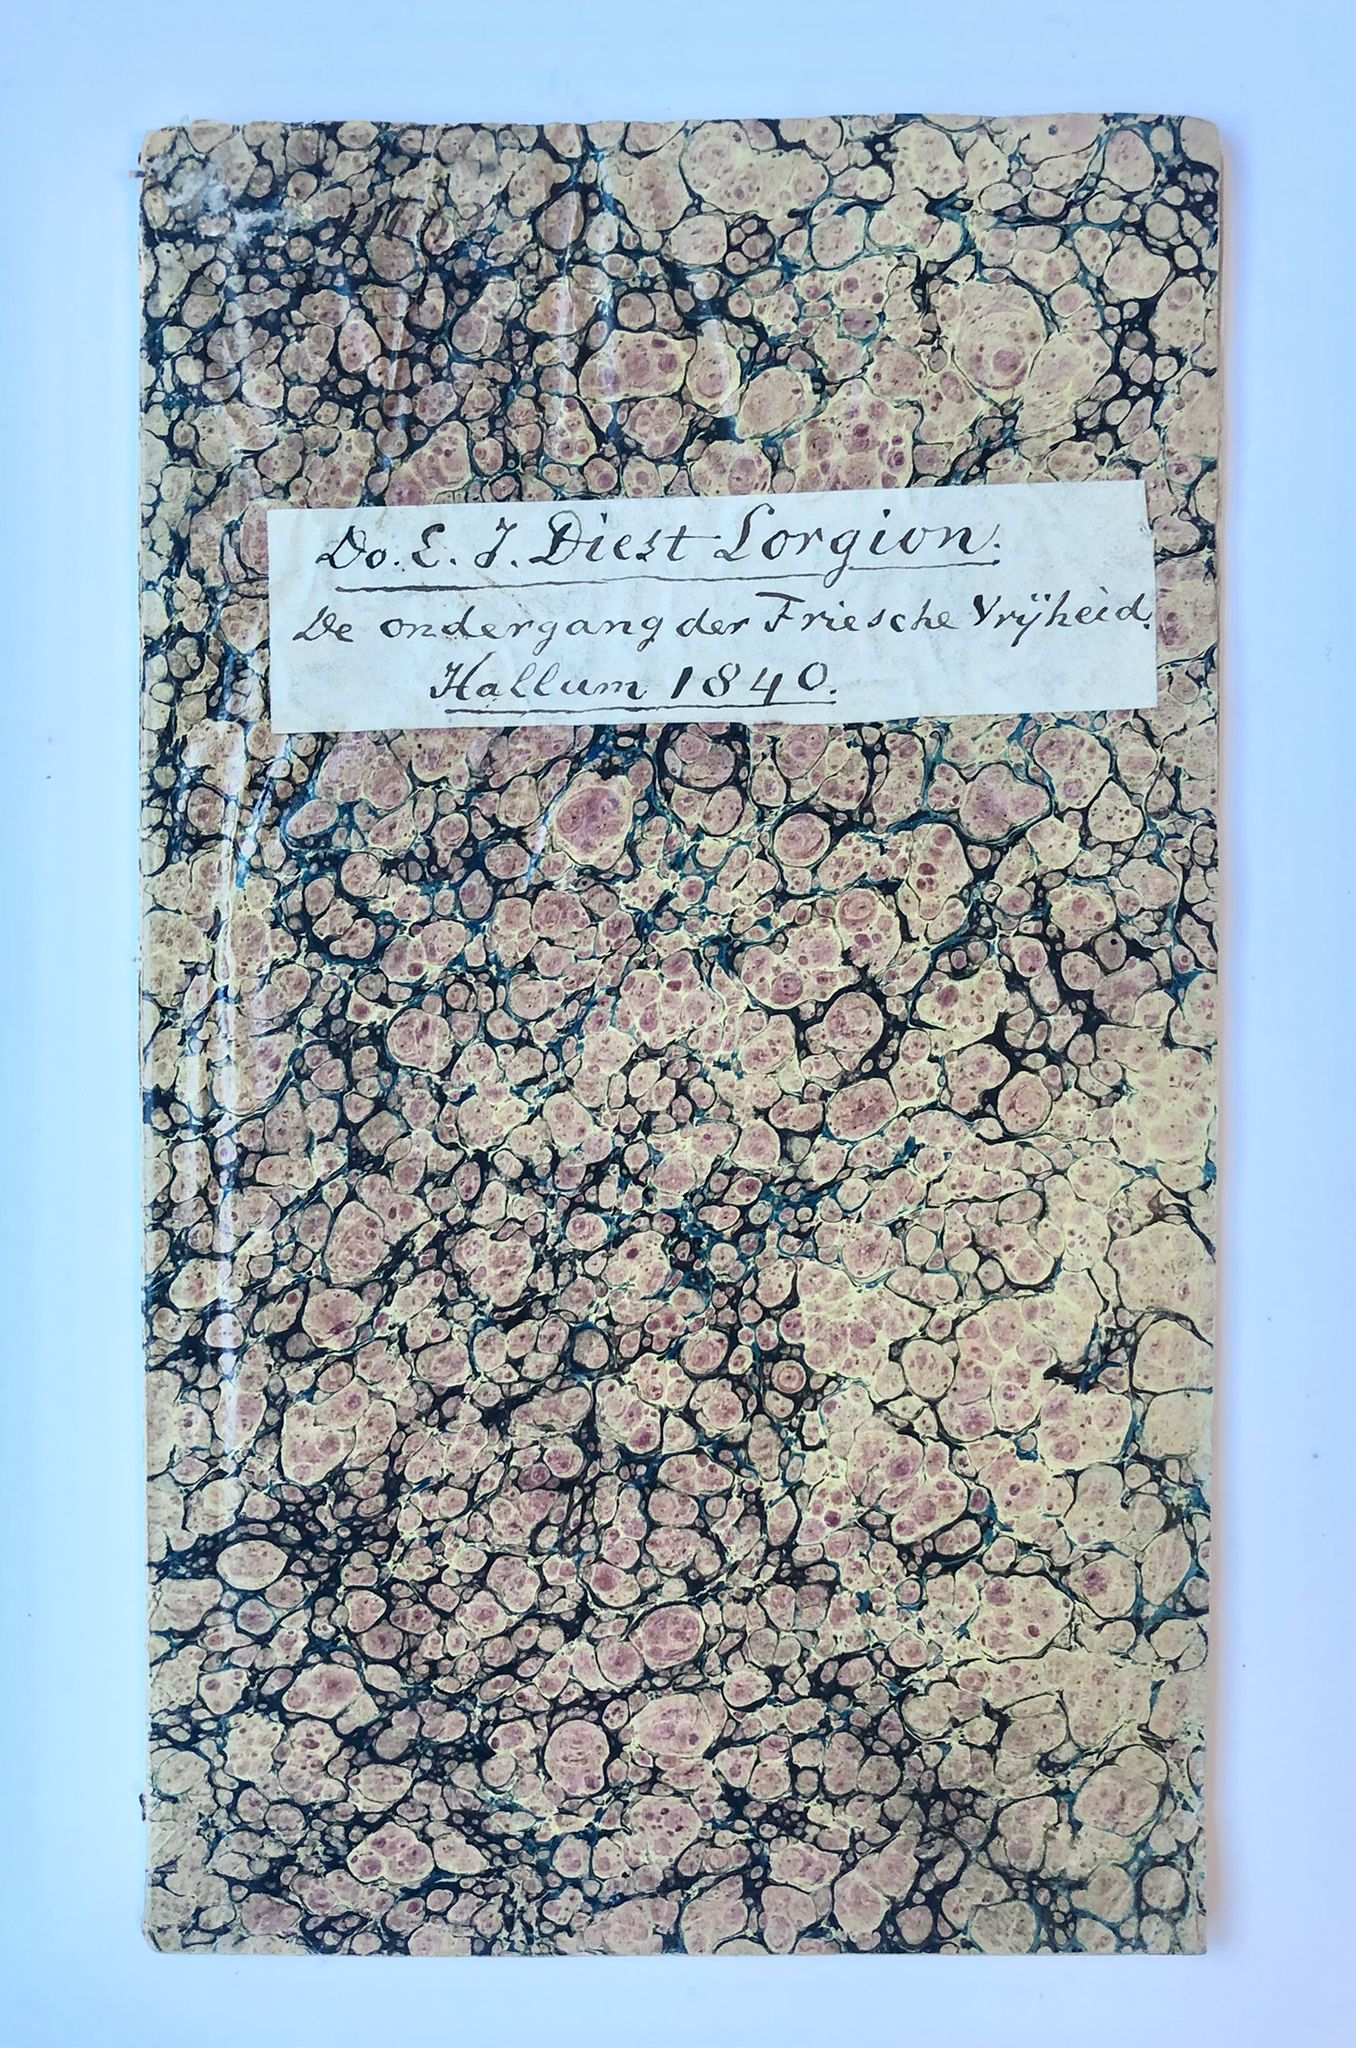 [Friesland 1840] De ondergang der Friesche Vrijheid, Hallum, 1840, 25 pp. Gift by the author E J Diest Lorgion to Mr. H.O. Feith